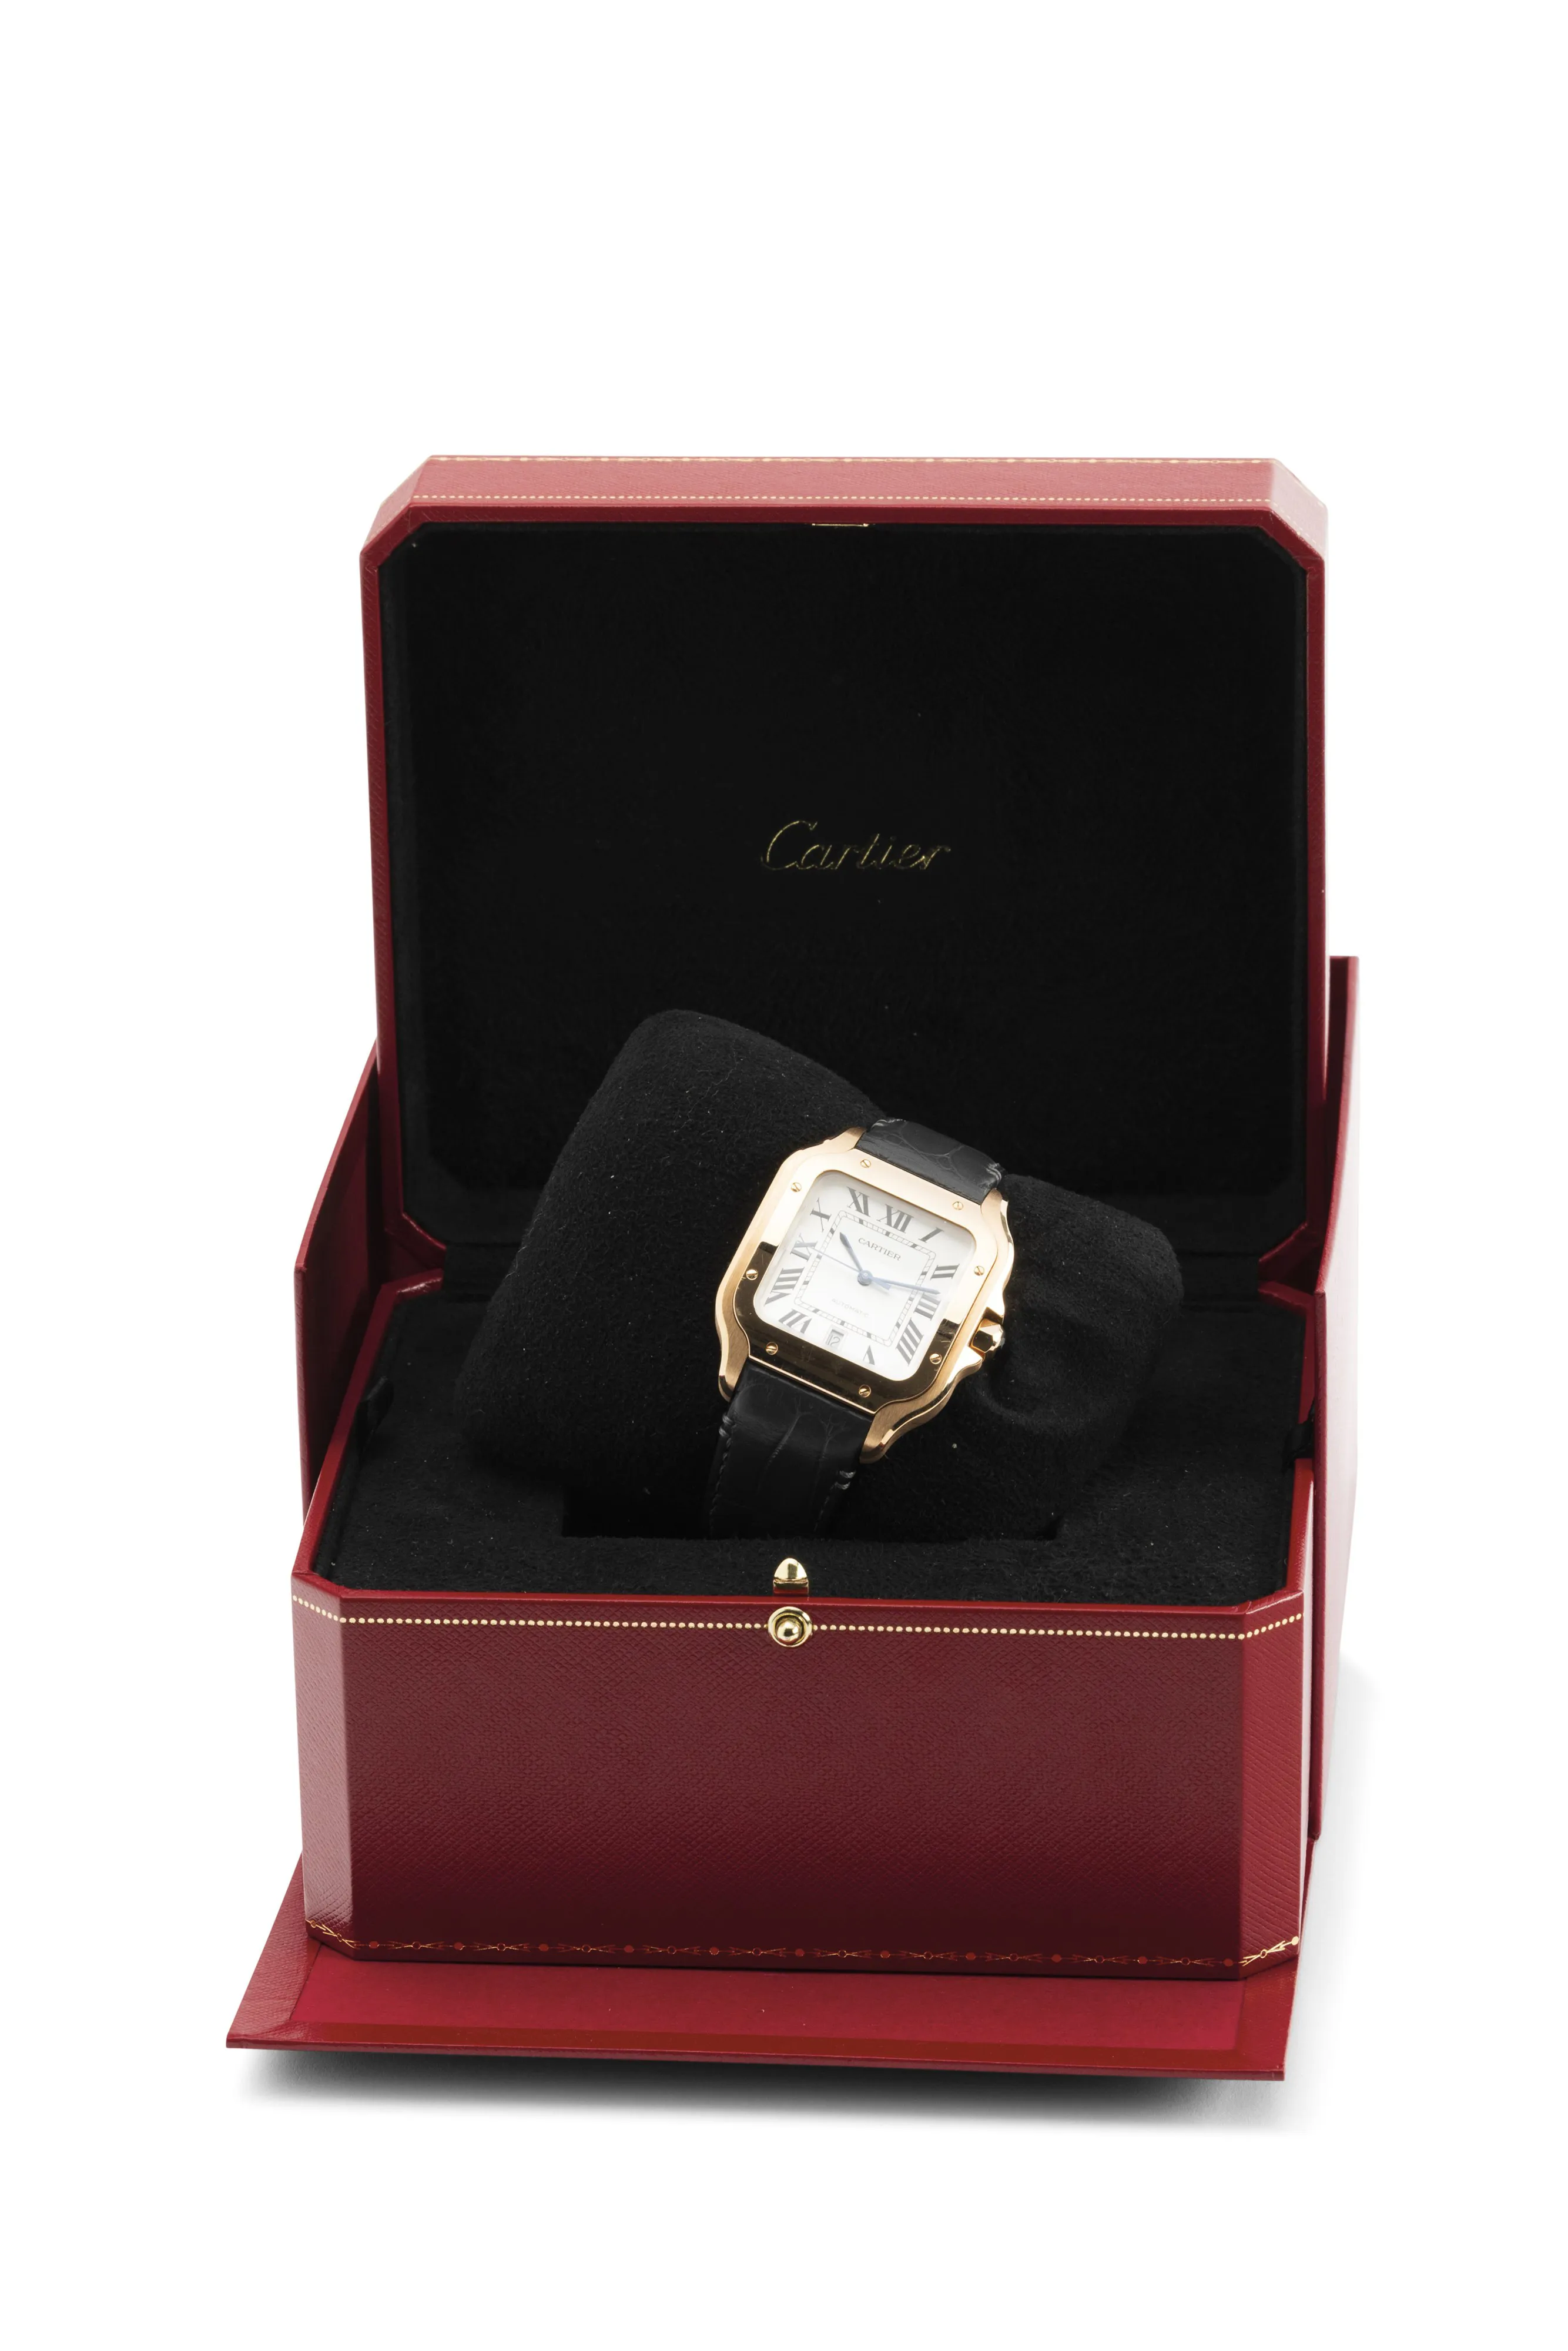 Cartier Santos WGSA0019 37mm Rose gold Silver 5